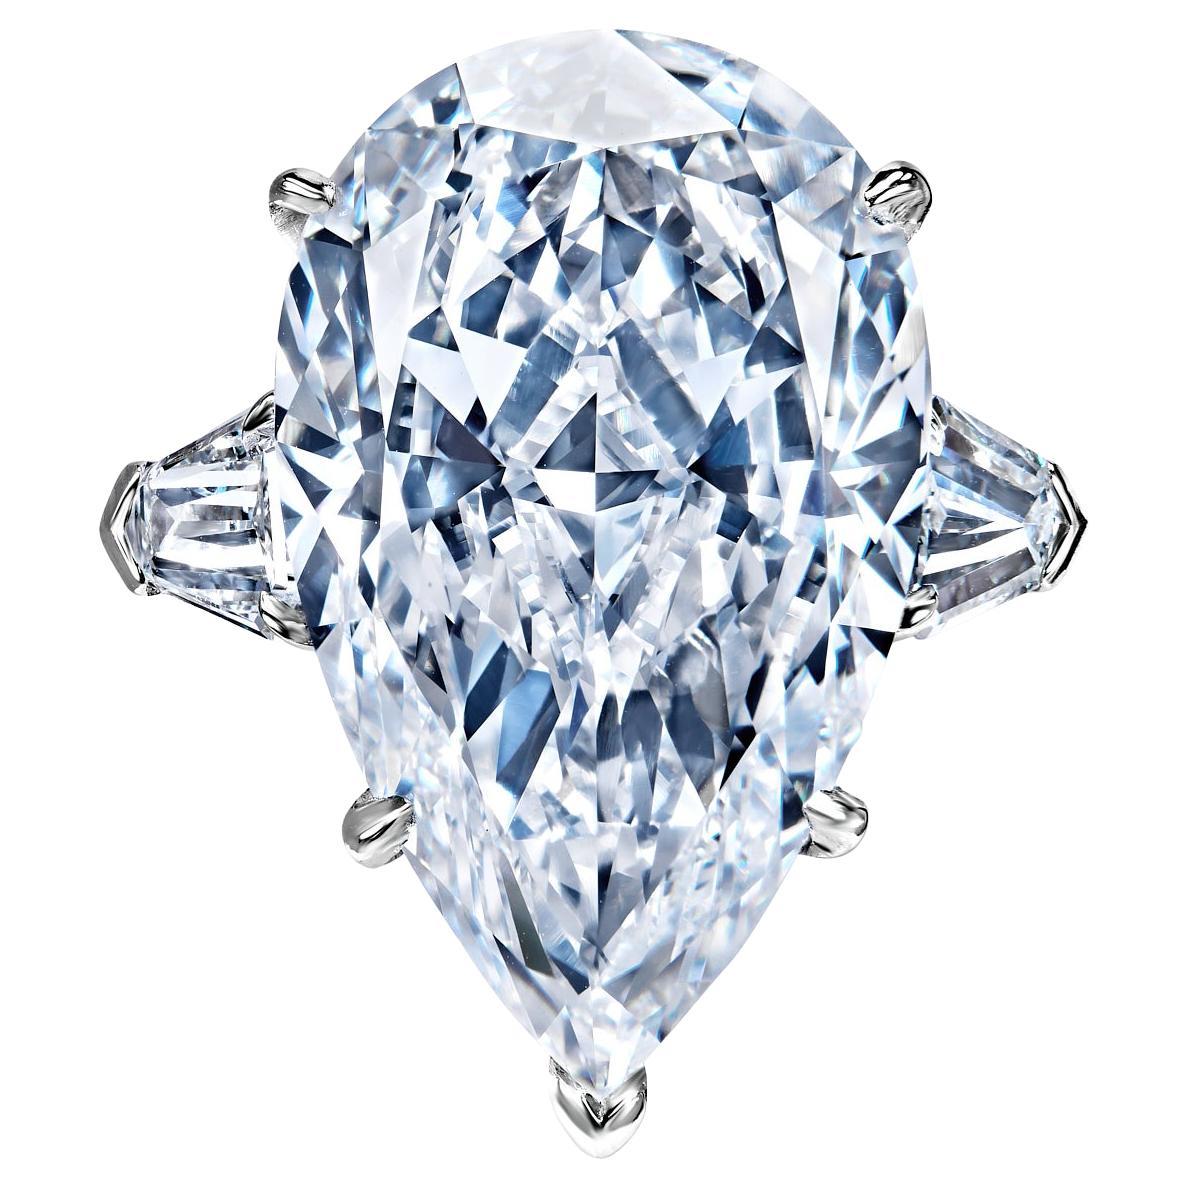 15 Carat Pear Shape Diamond Engagement Ring Certified E VS1 For Sale